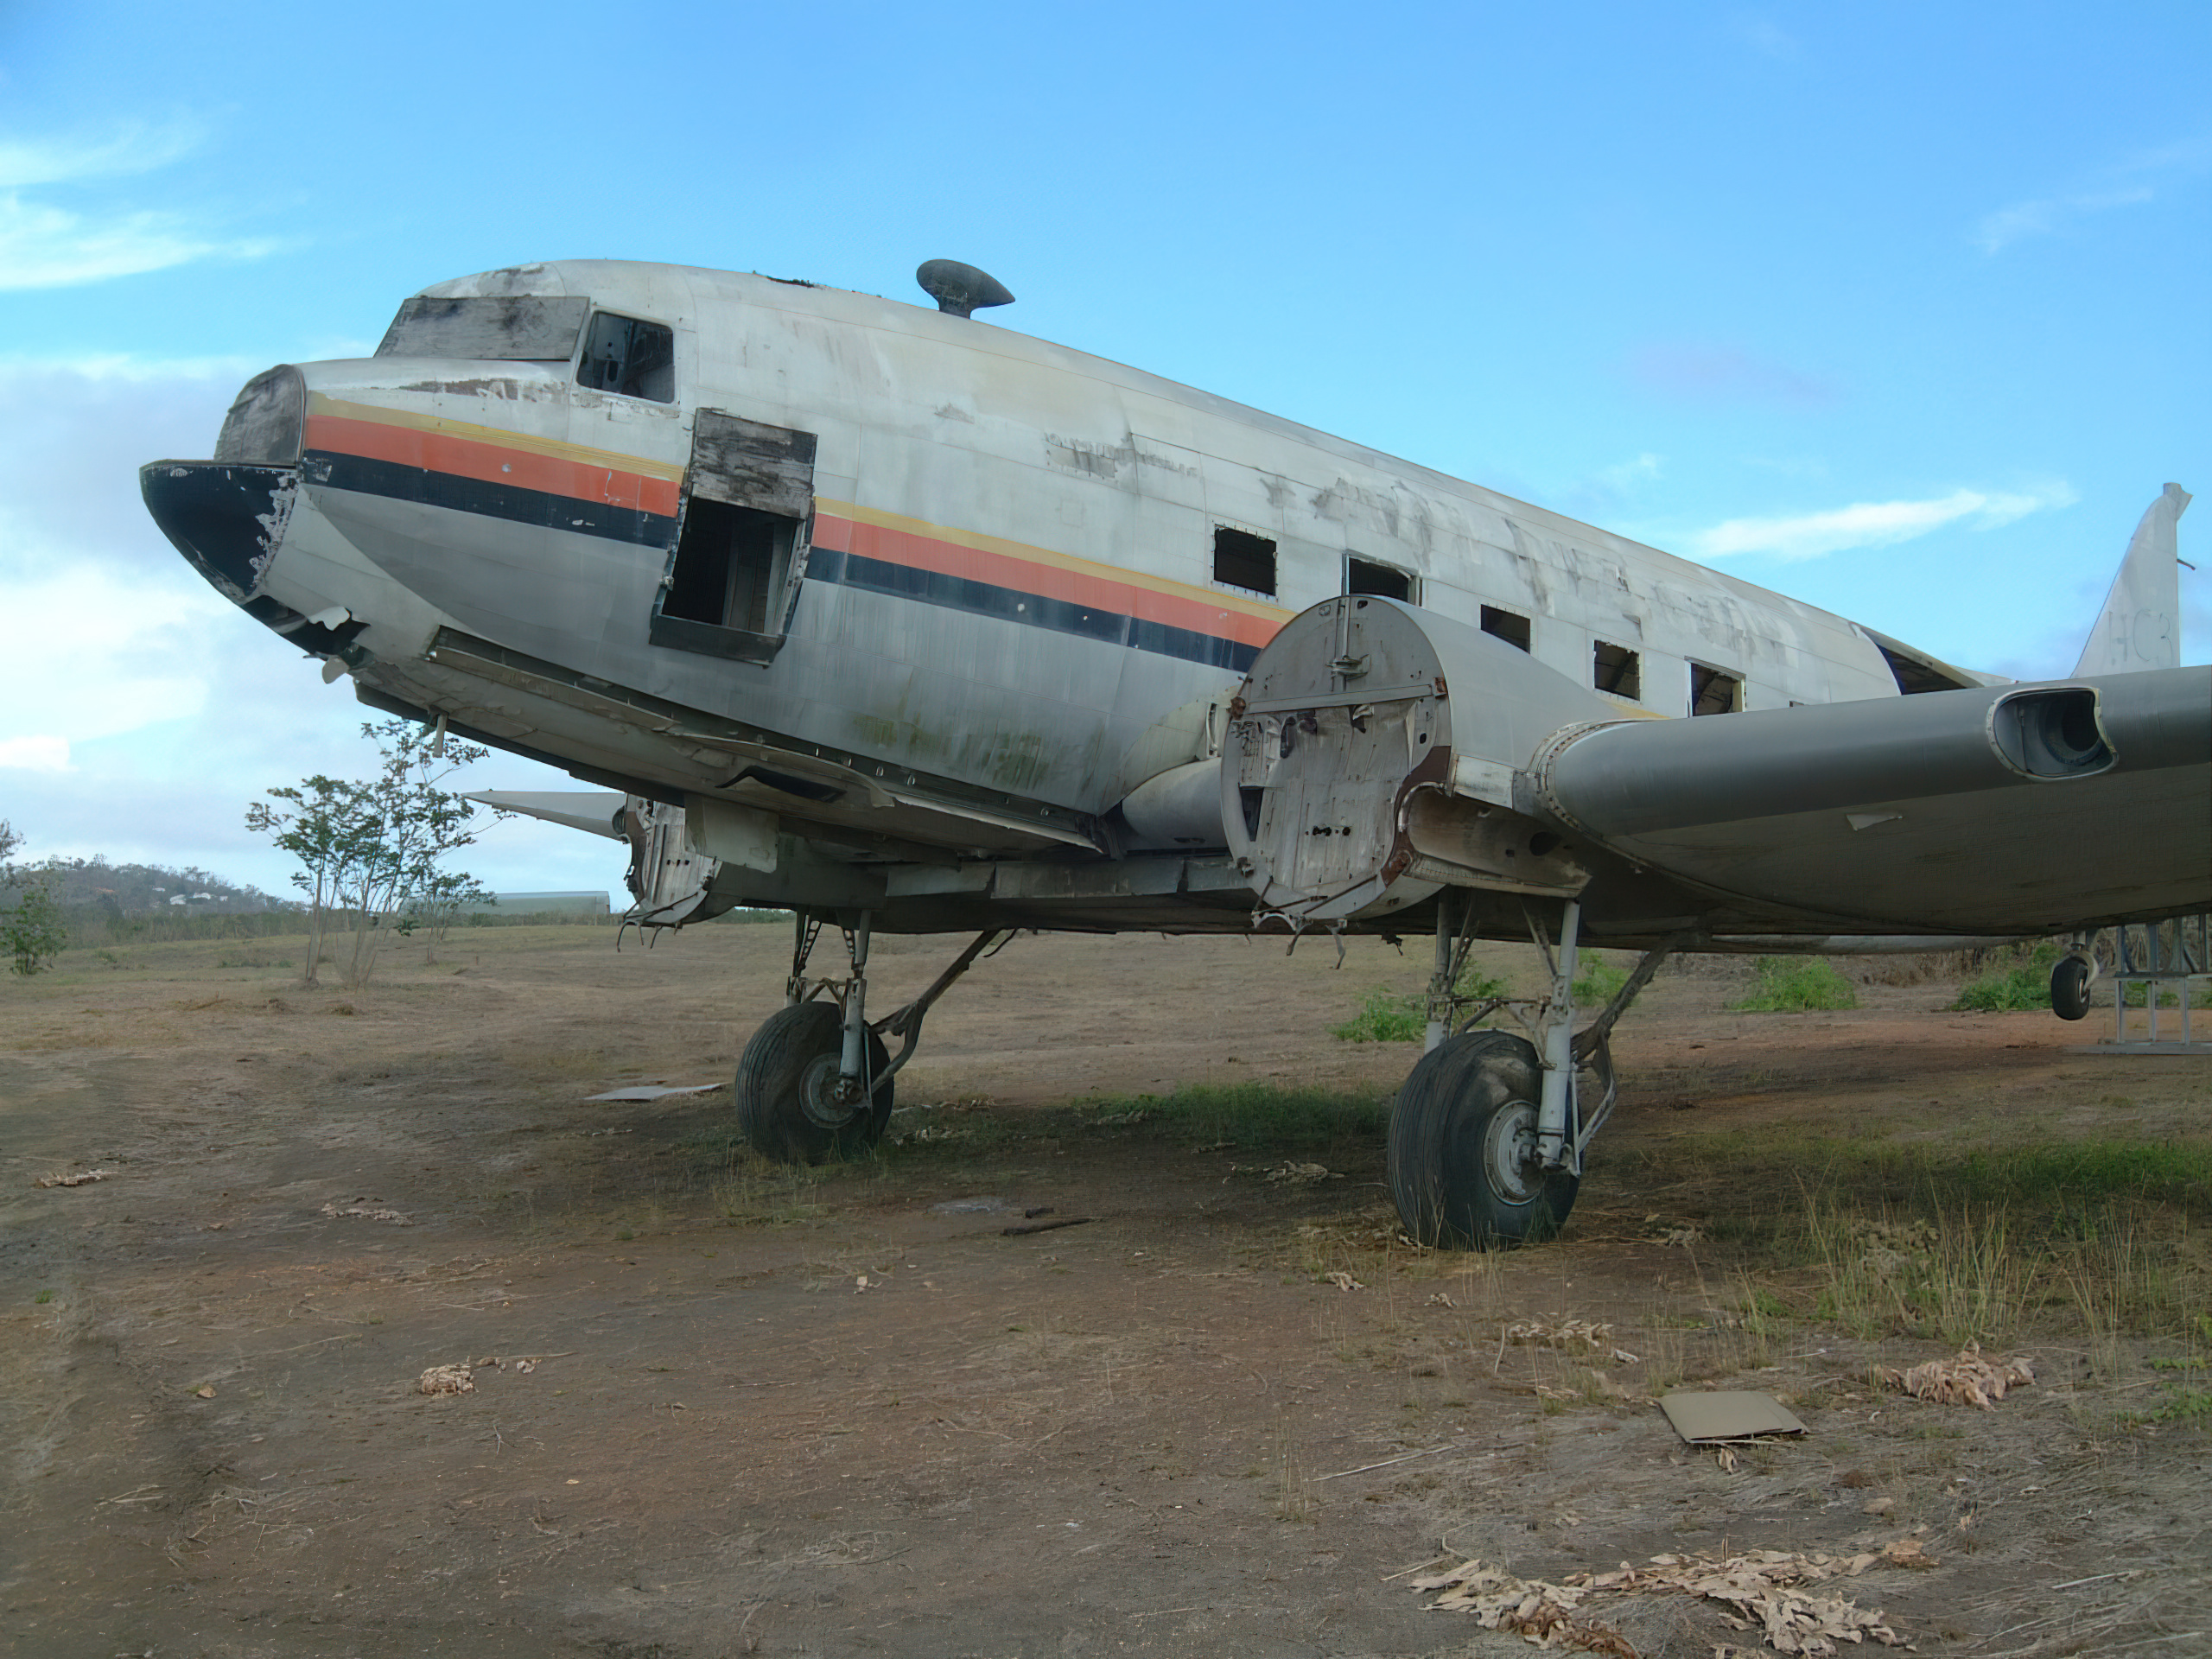 Abandoned Douglas C 47 Dakota Air New Guinea N55894 aircraft at Port Moresby PNG 29th Sep 2002 01